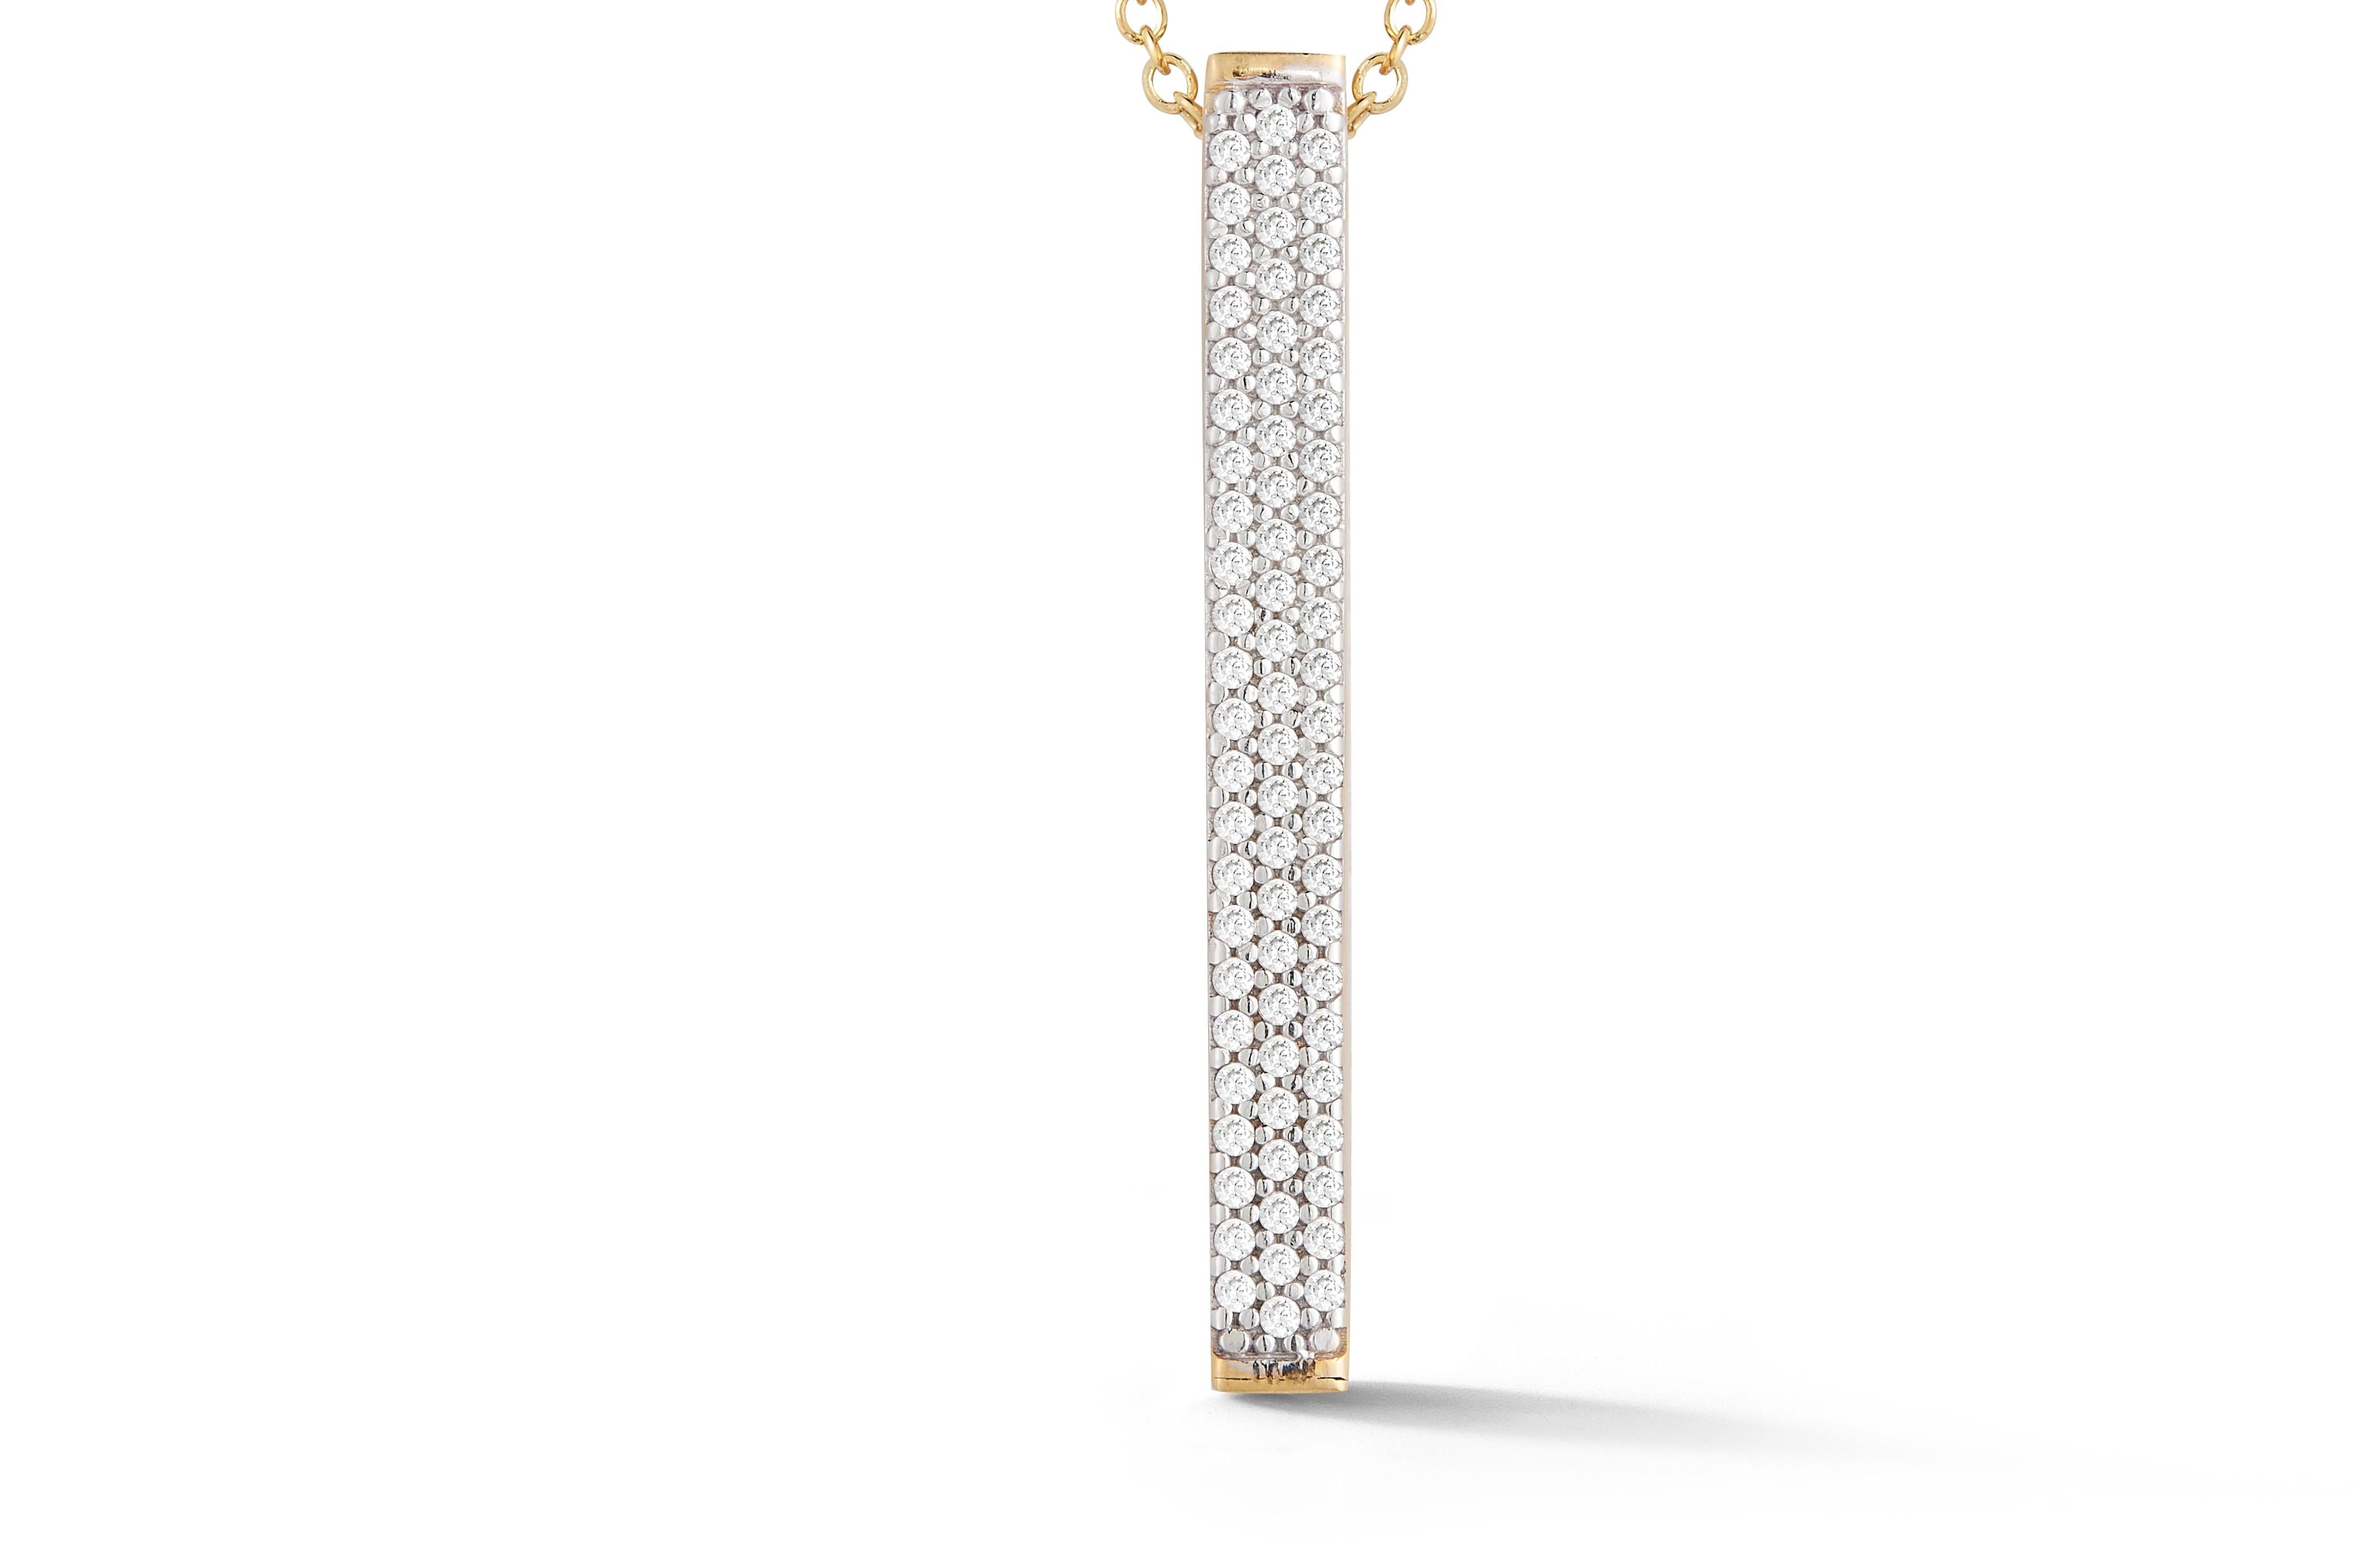 14 Karat Yellow Gold Hand-Crafted Polish-Finished Diamond Bar Pendant, Enhanced with 0.52 Carat Diamonds, Sliding on a 16